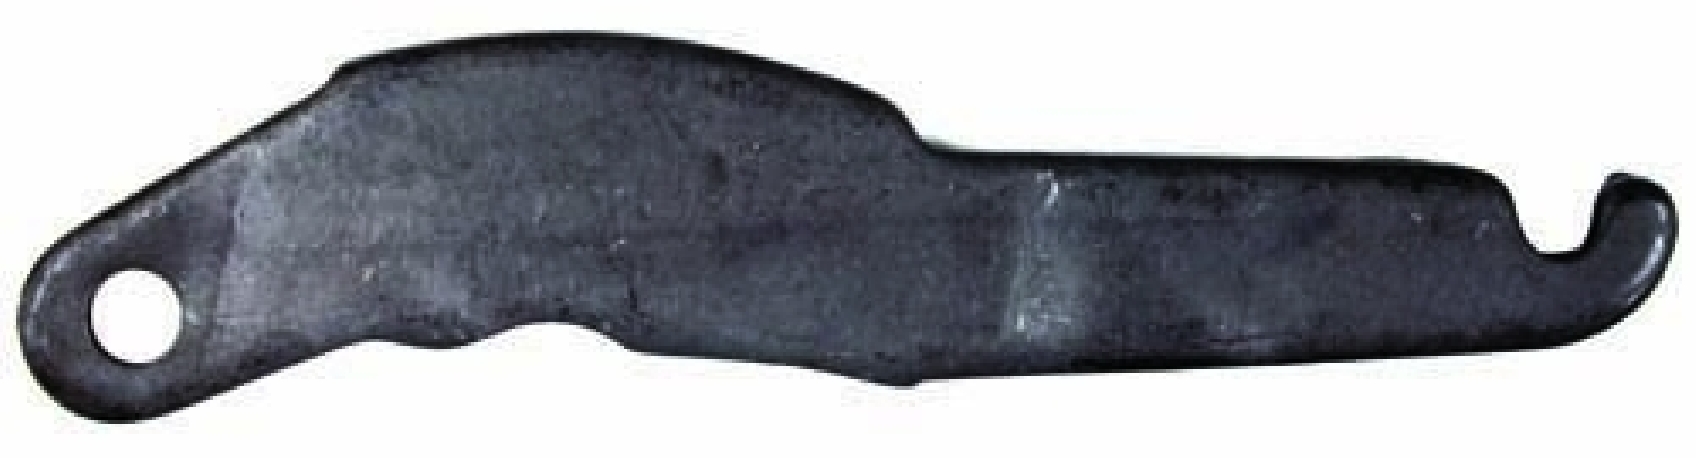 Handbrake Lever Arm, Left, Beetle 58 79